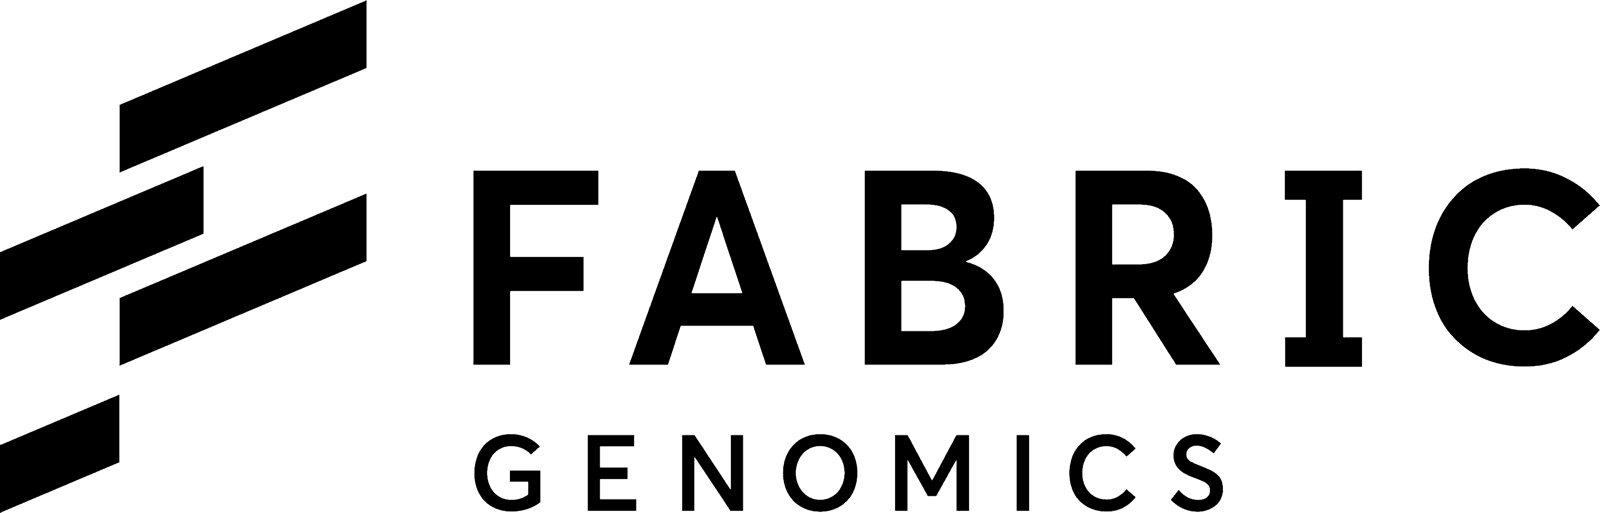 Fabric Genomics-logo-34